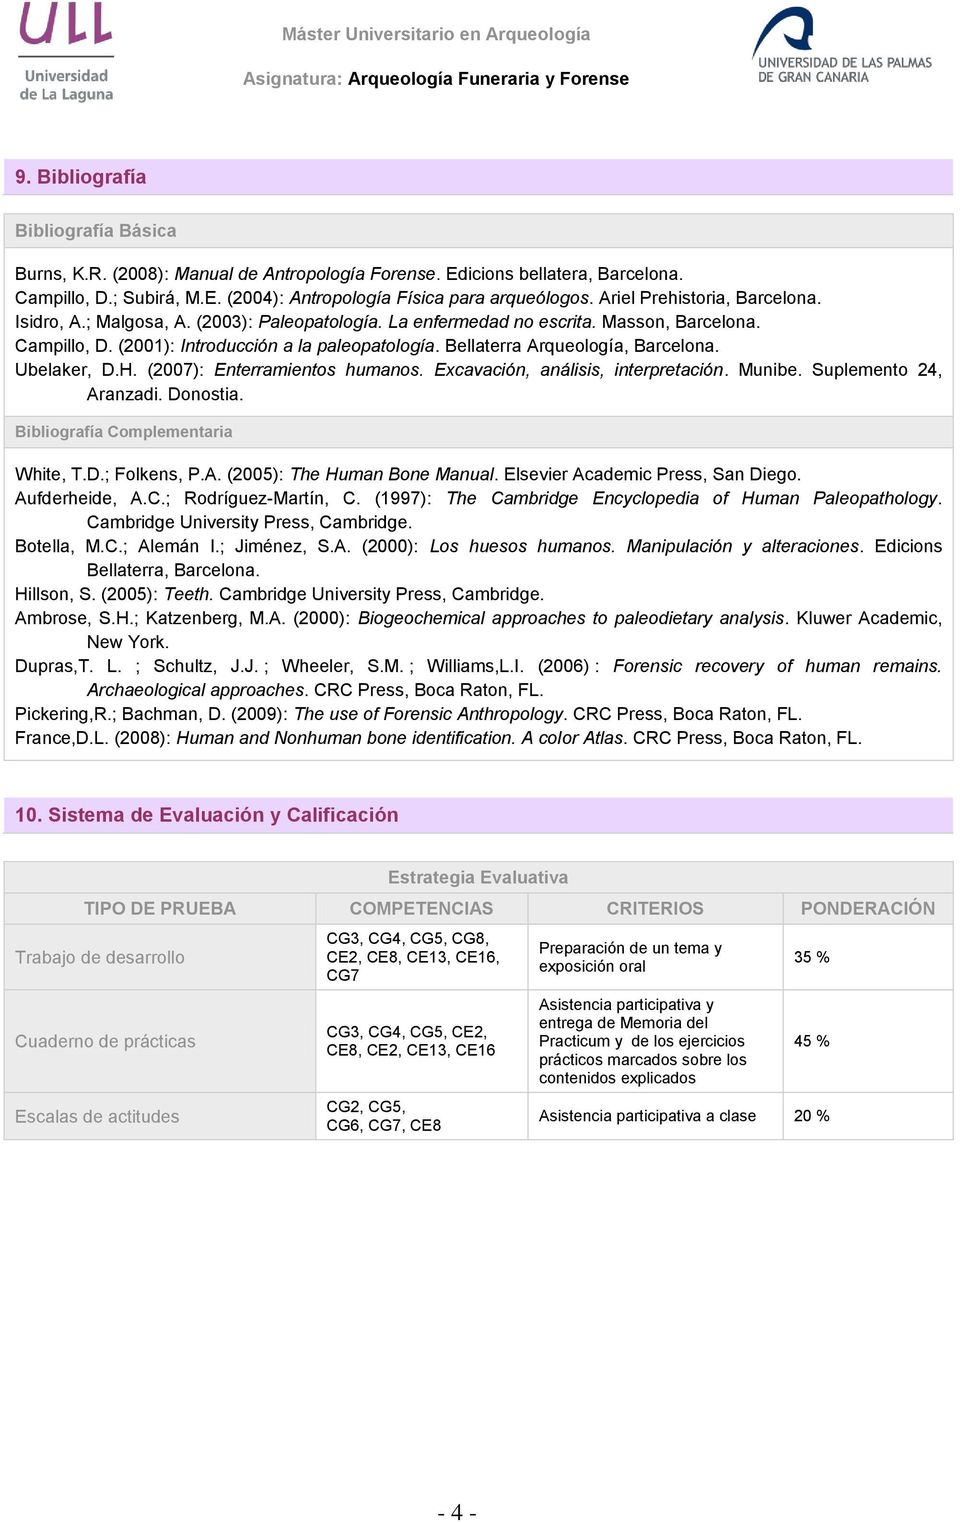 Bellaterra Arqueología, Barcelona. Ubelaker, D.H. (2007): Enterramientos humanos. Excavación, análisis, interpretación. Munibe. Suplemento 24, Aranzadi. Donostia. Bibliografía Complementaria White, T.